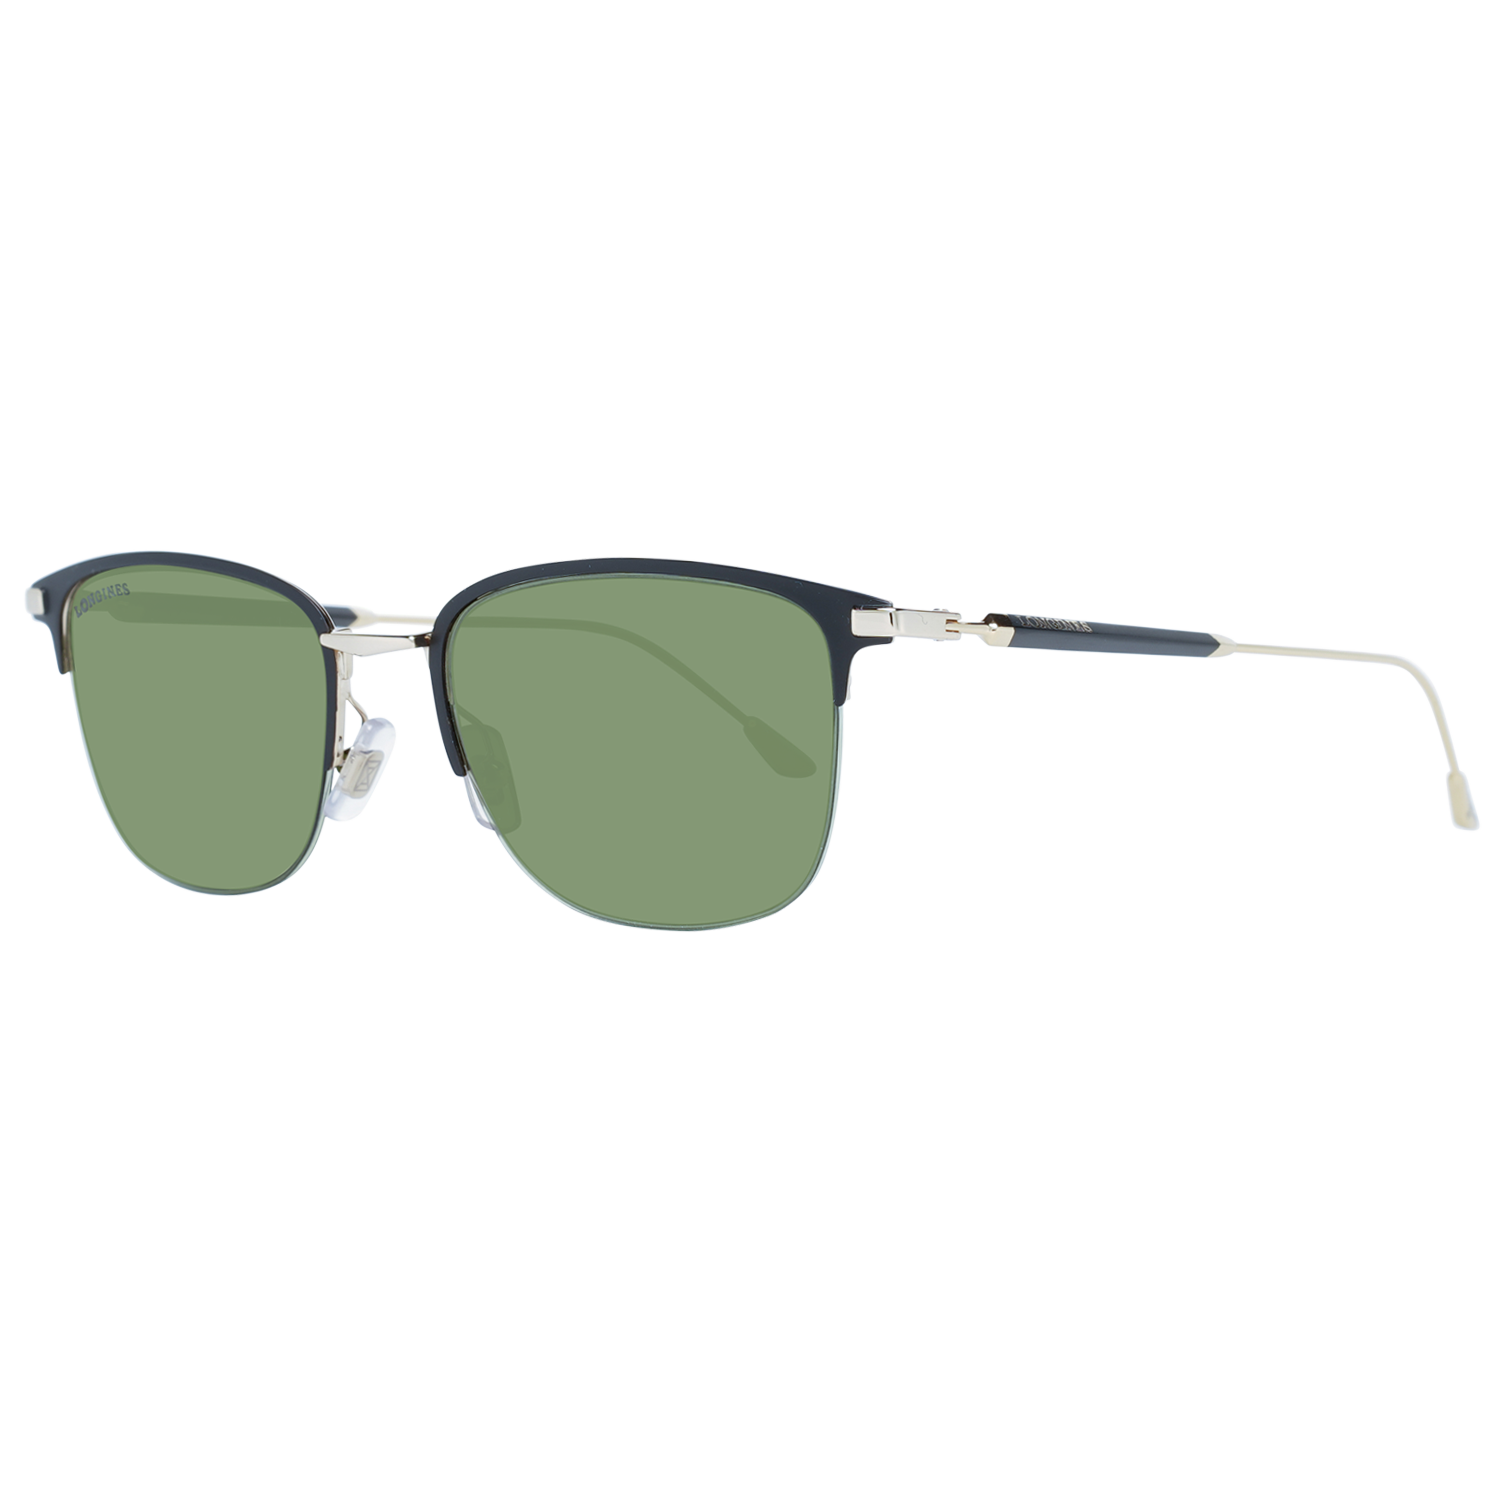 Longines Sunglasses Longines Sunglasses LG0022 02N 53mm Eyeglasses Eyewear UK USA Australia 